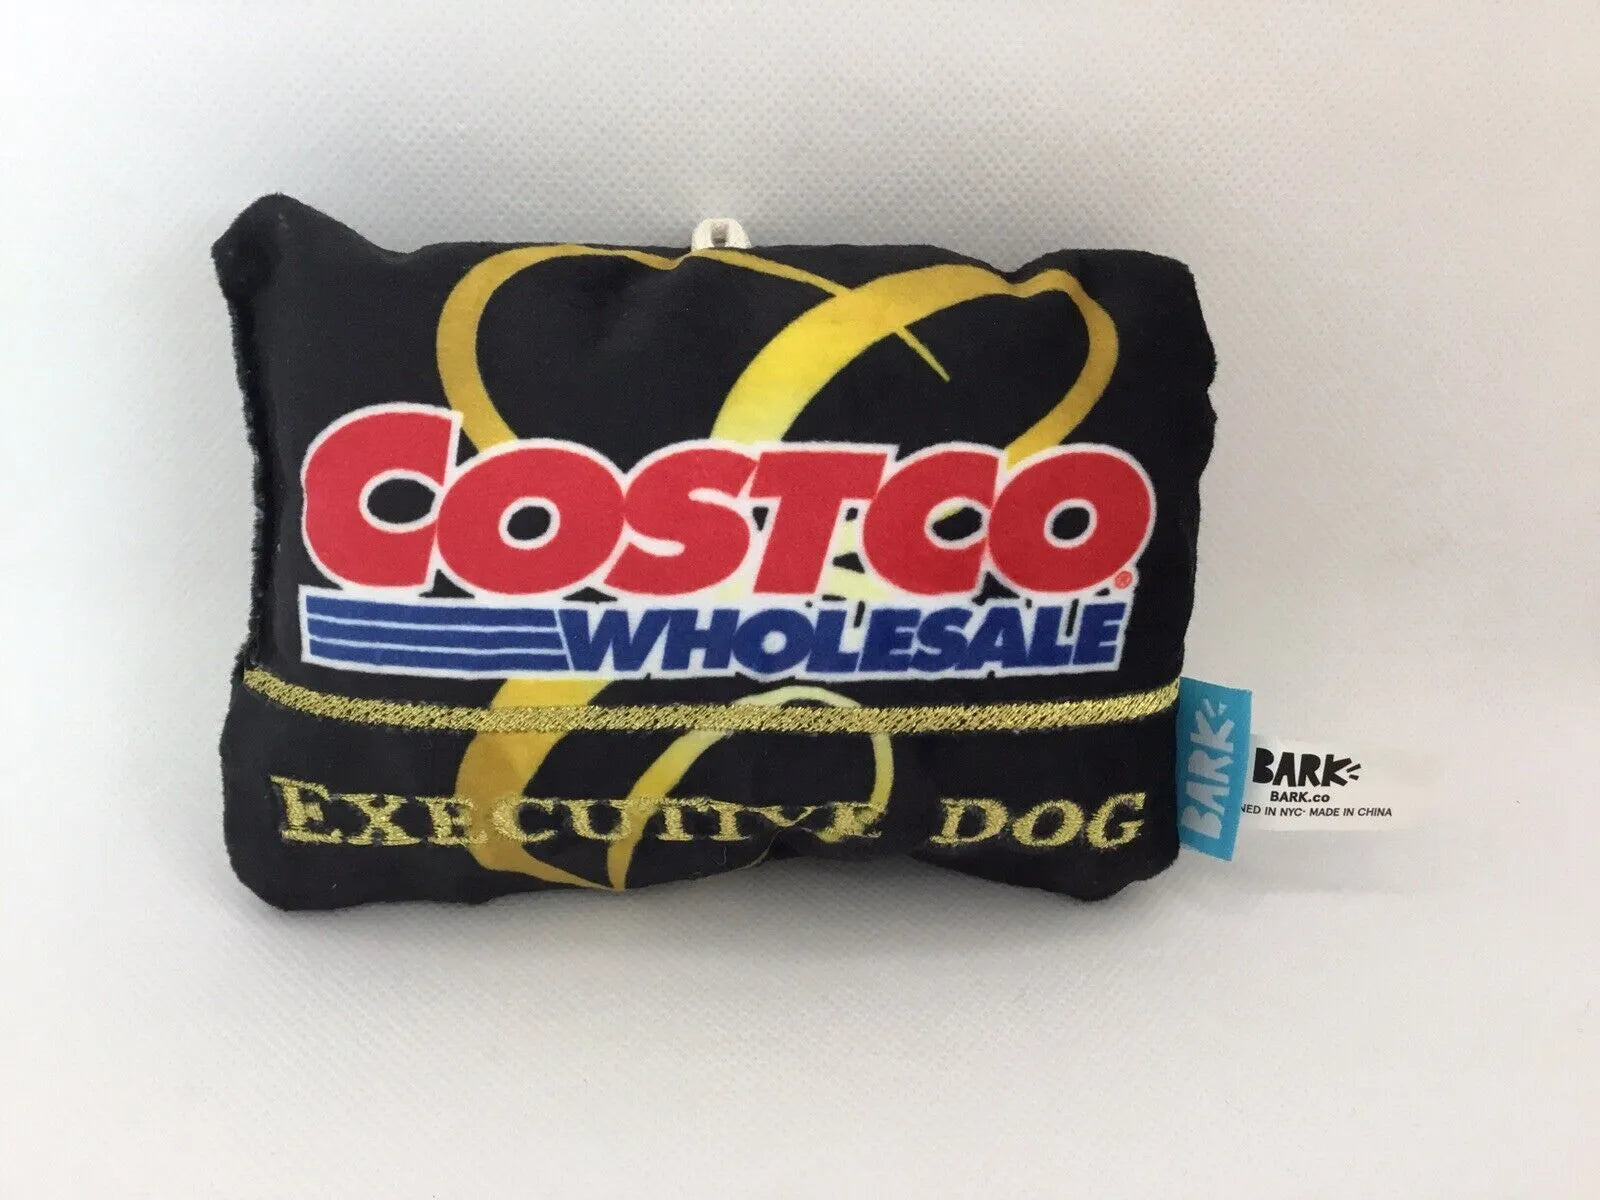 Costco Kirkland Dog Toy "Executive Dog" Membership Card Plush Toy